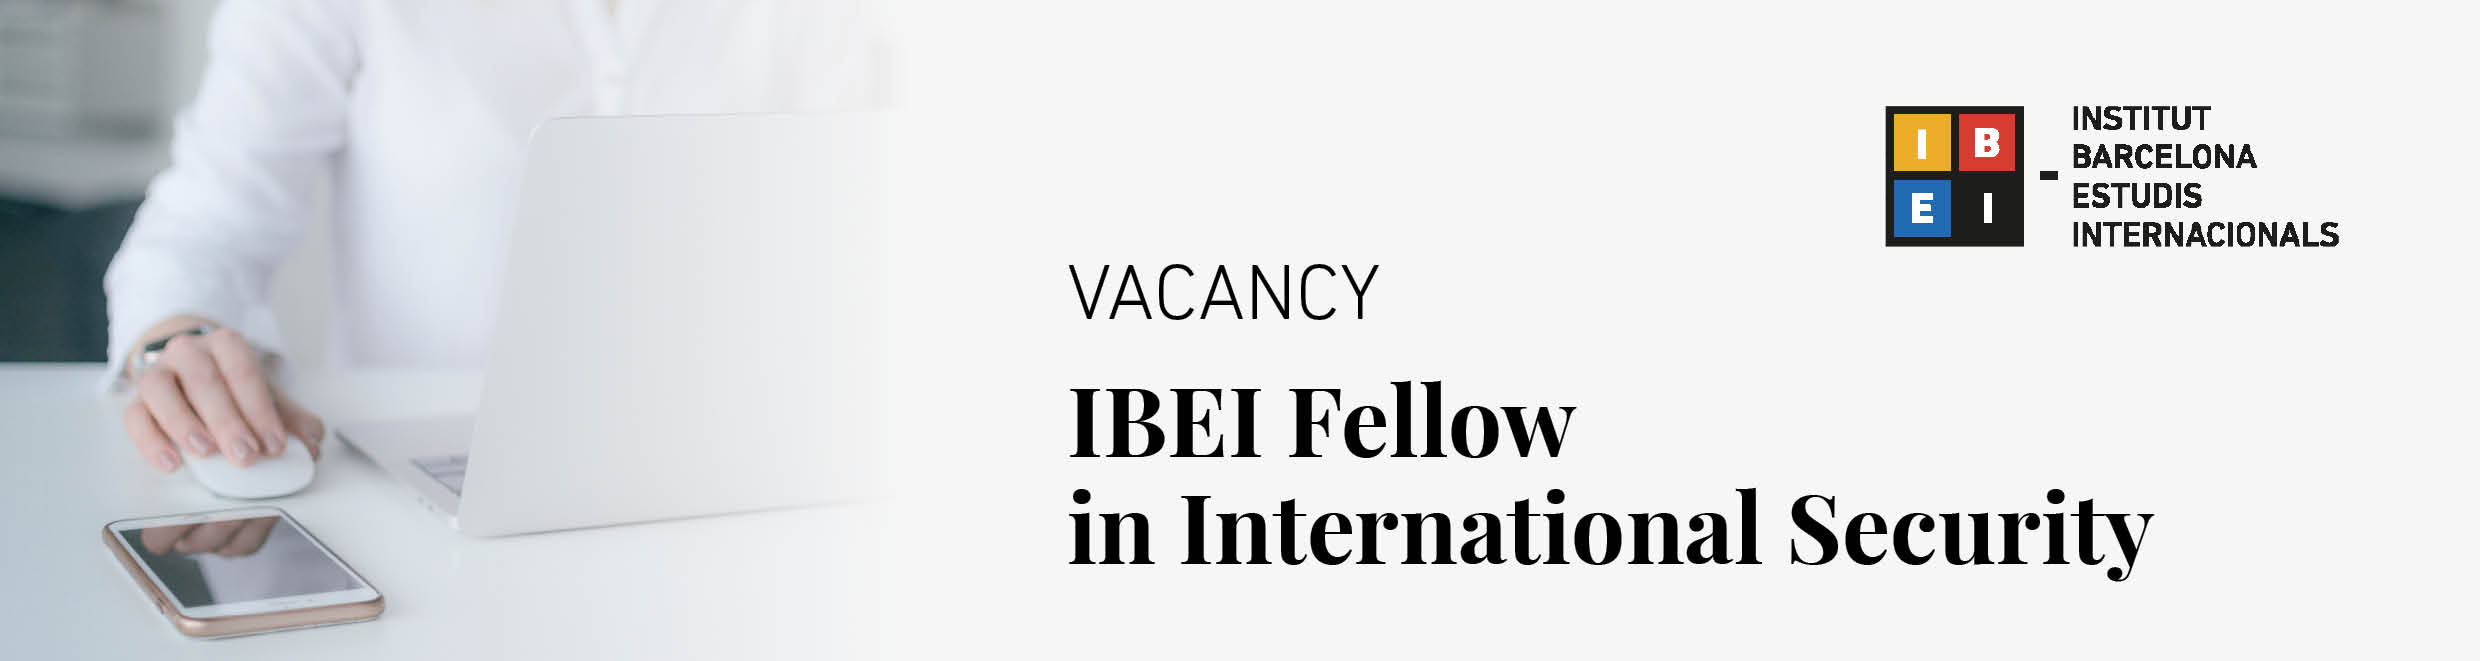 IBEI Fellow in International Security_capçalera